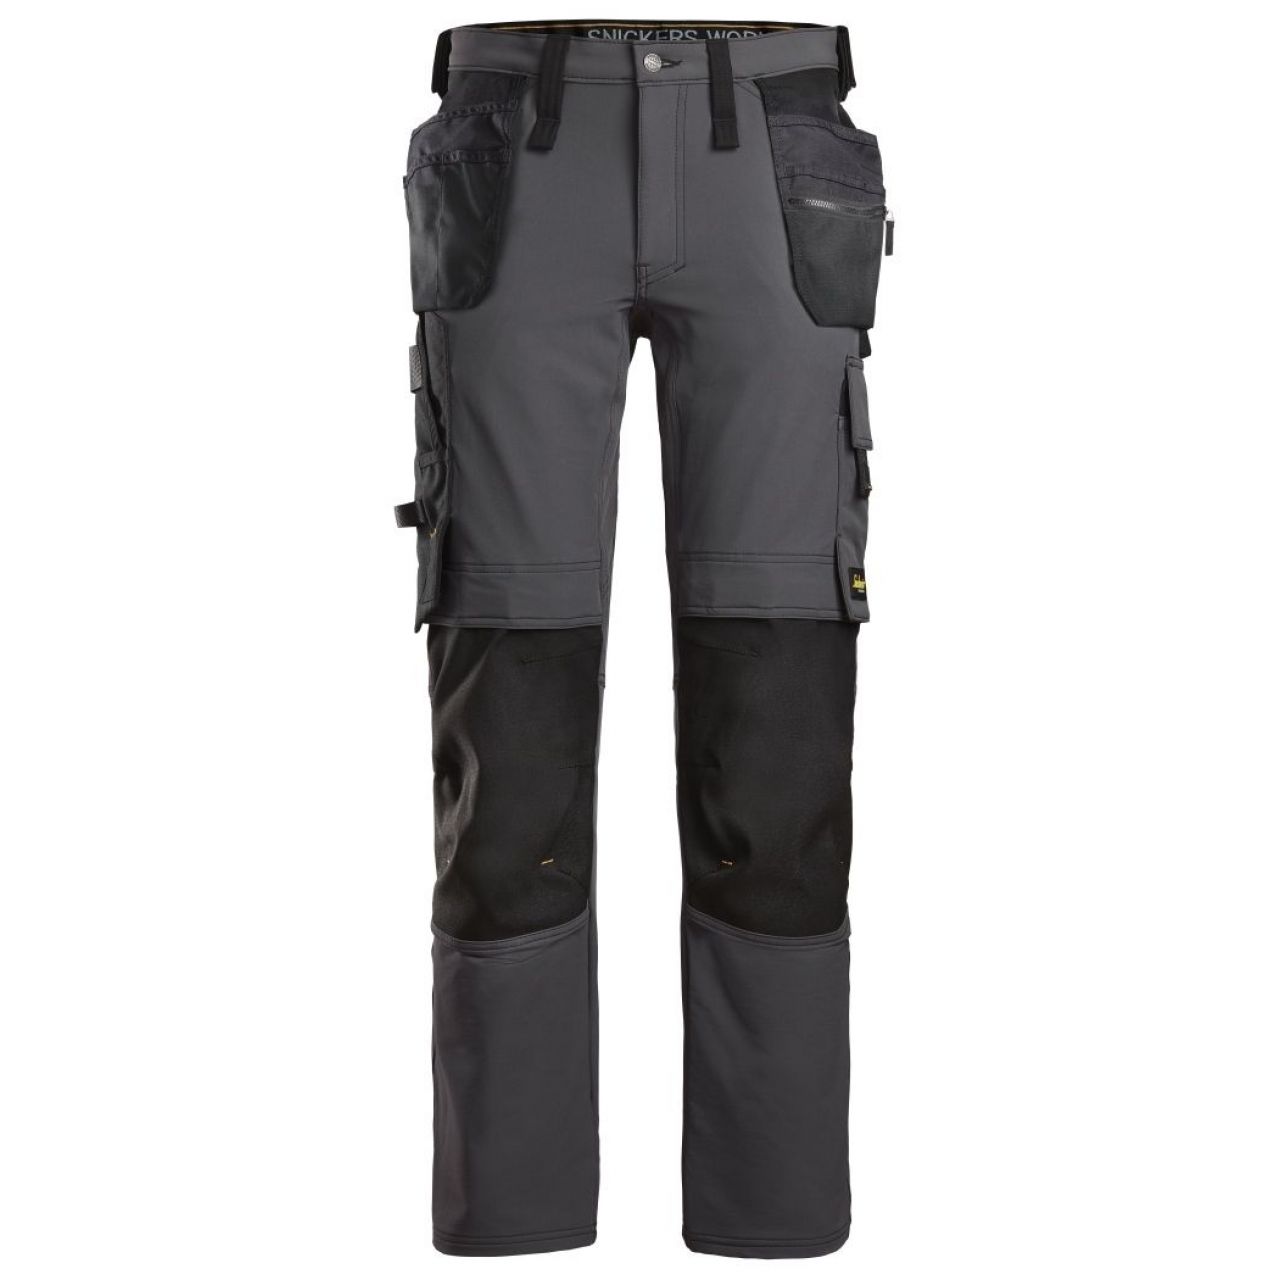 Pantalon elastico AllroundWork bolsillos flotantes gris acero-negro talla 100